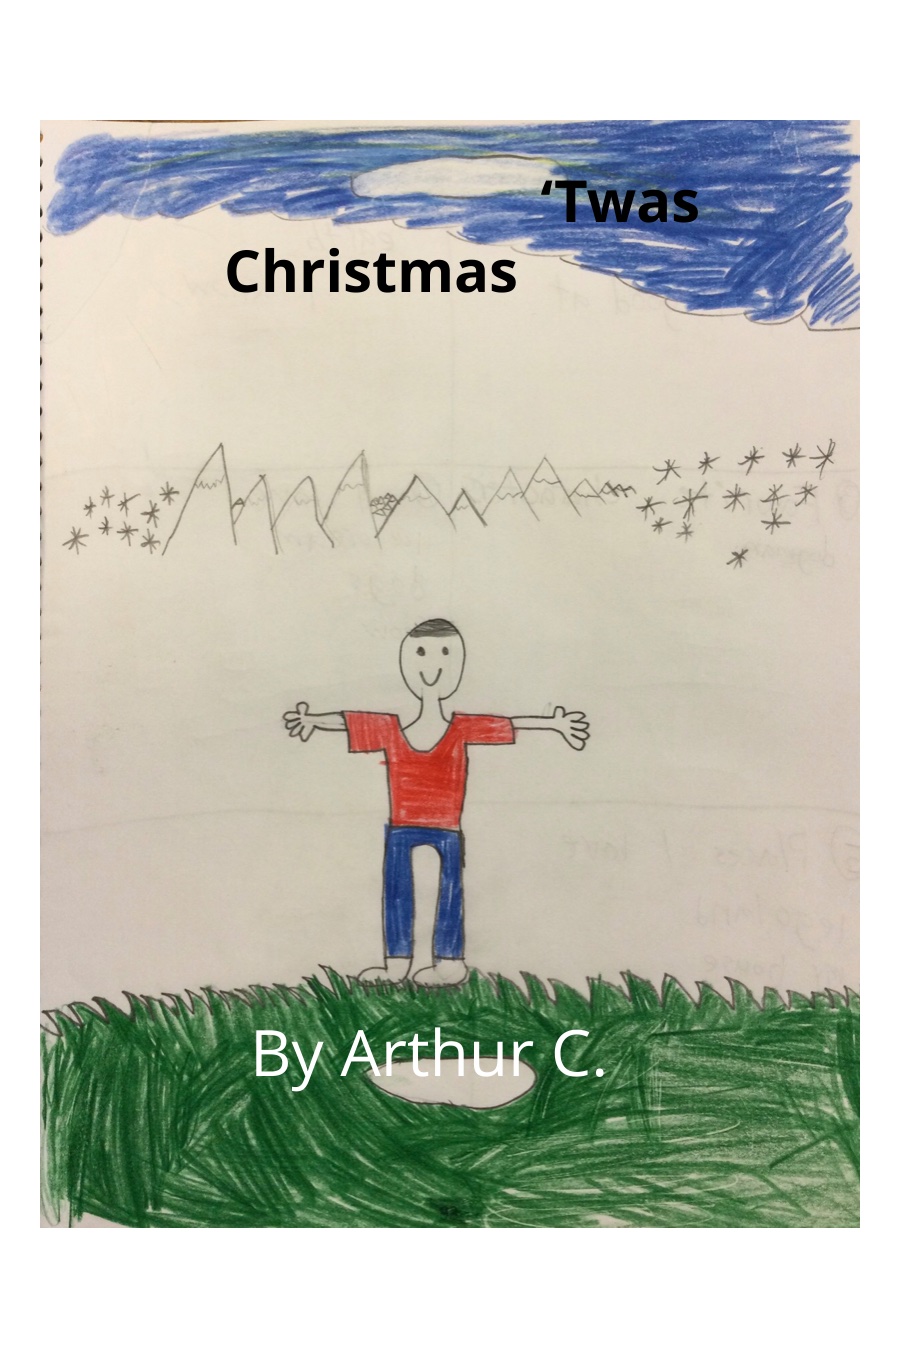 Twas Christmas by Arthur C